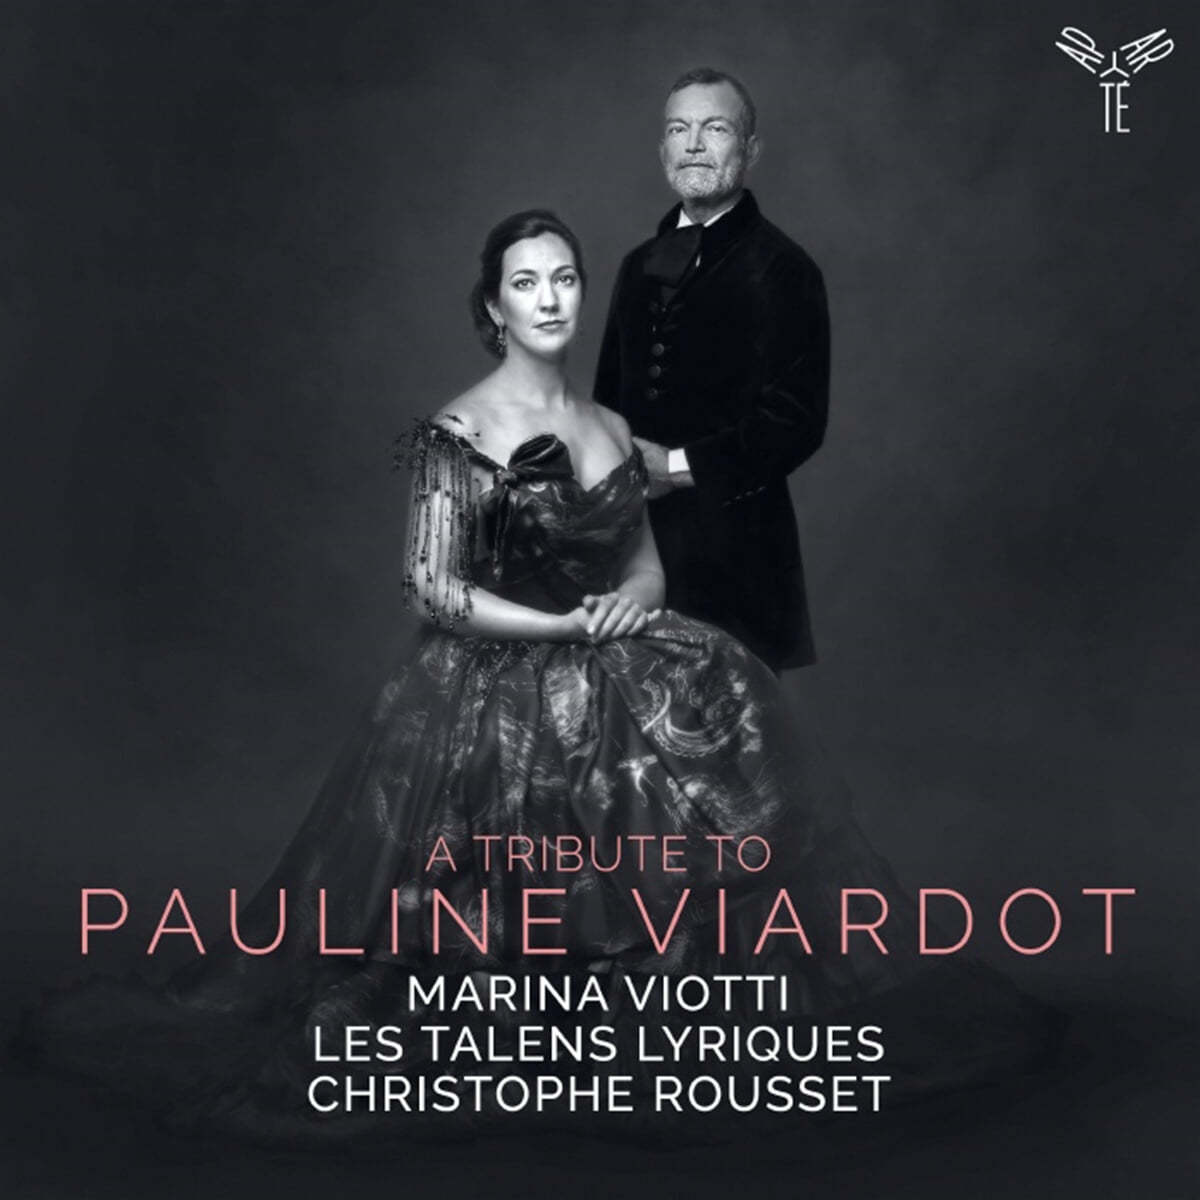 Marina Viotti / Christophe Rousset 폴린 비아르도를 기리며 - 낭만파 오페라 아리아집 (A Tribute To Pauline Viardot) 